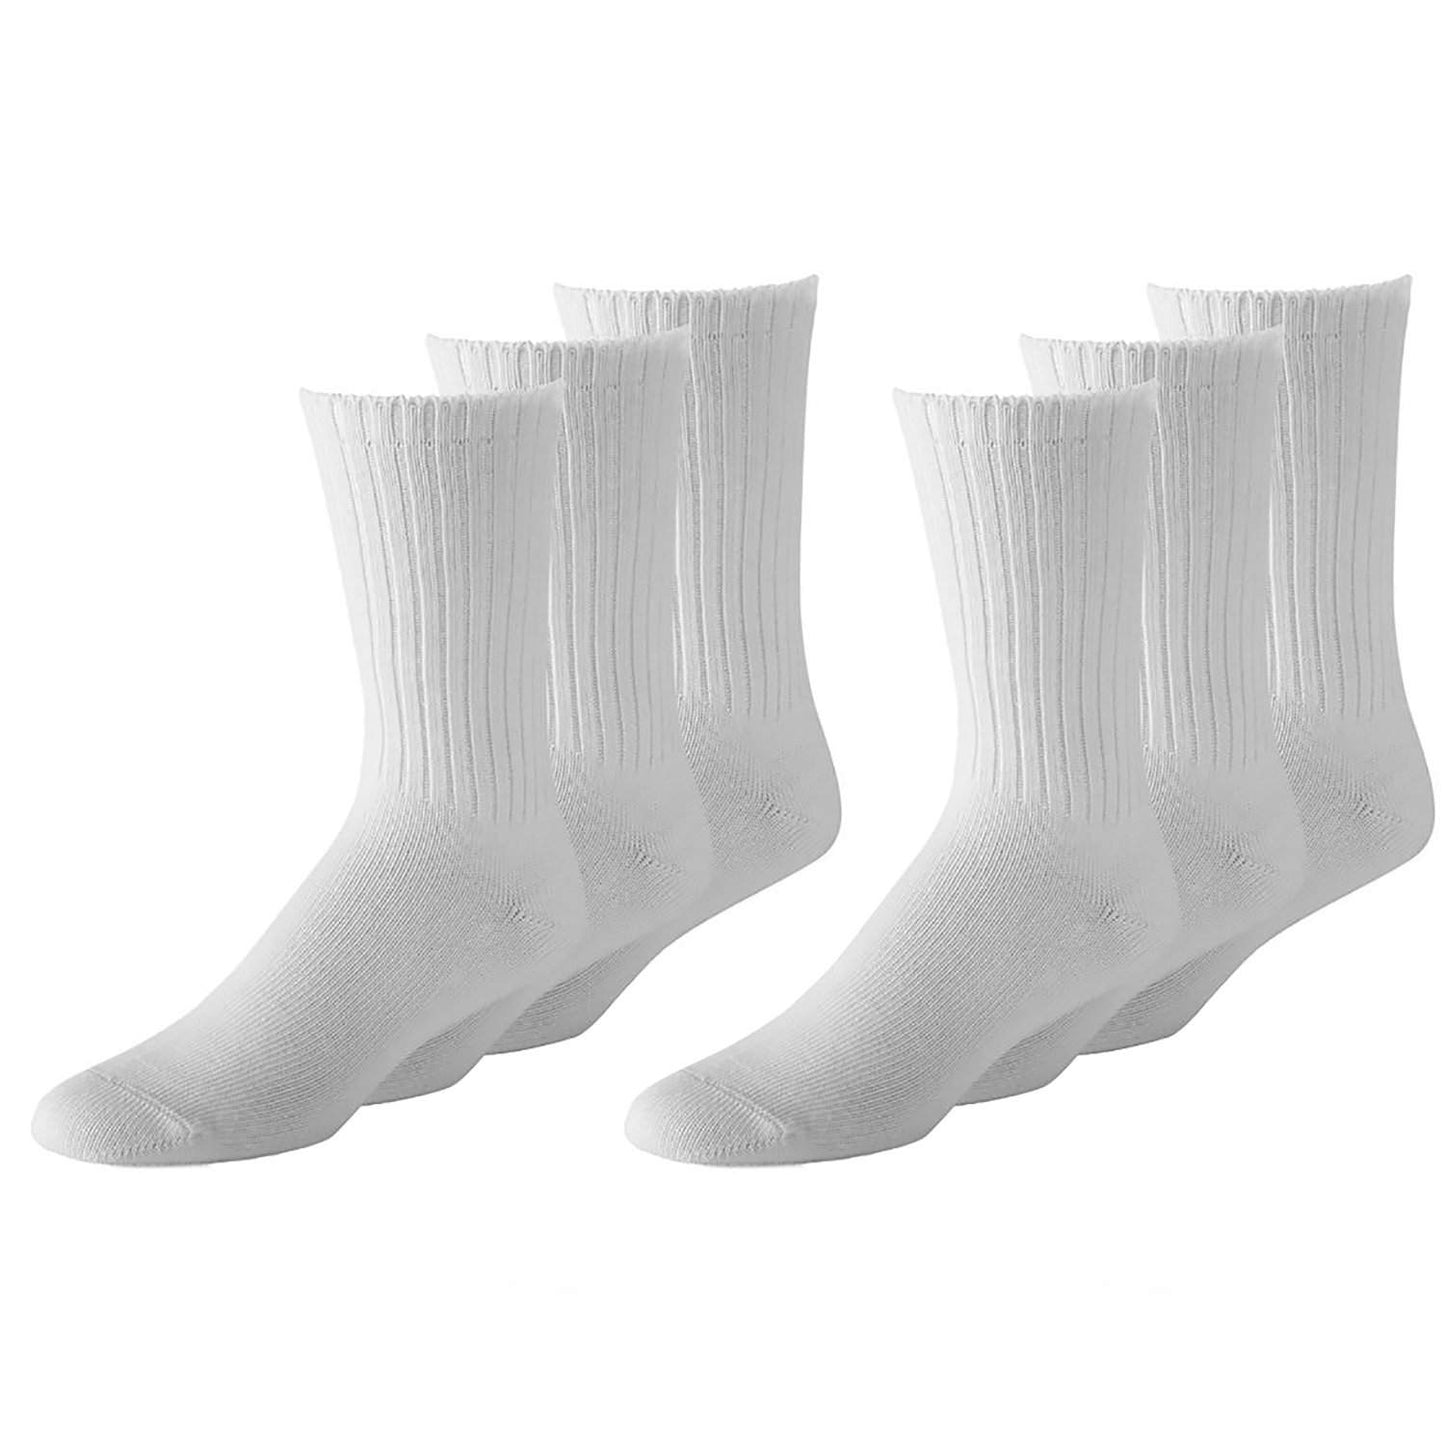 Daily Basic Unisex Crew Athletic Sports Cotton Socks  36 Pack